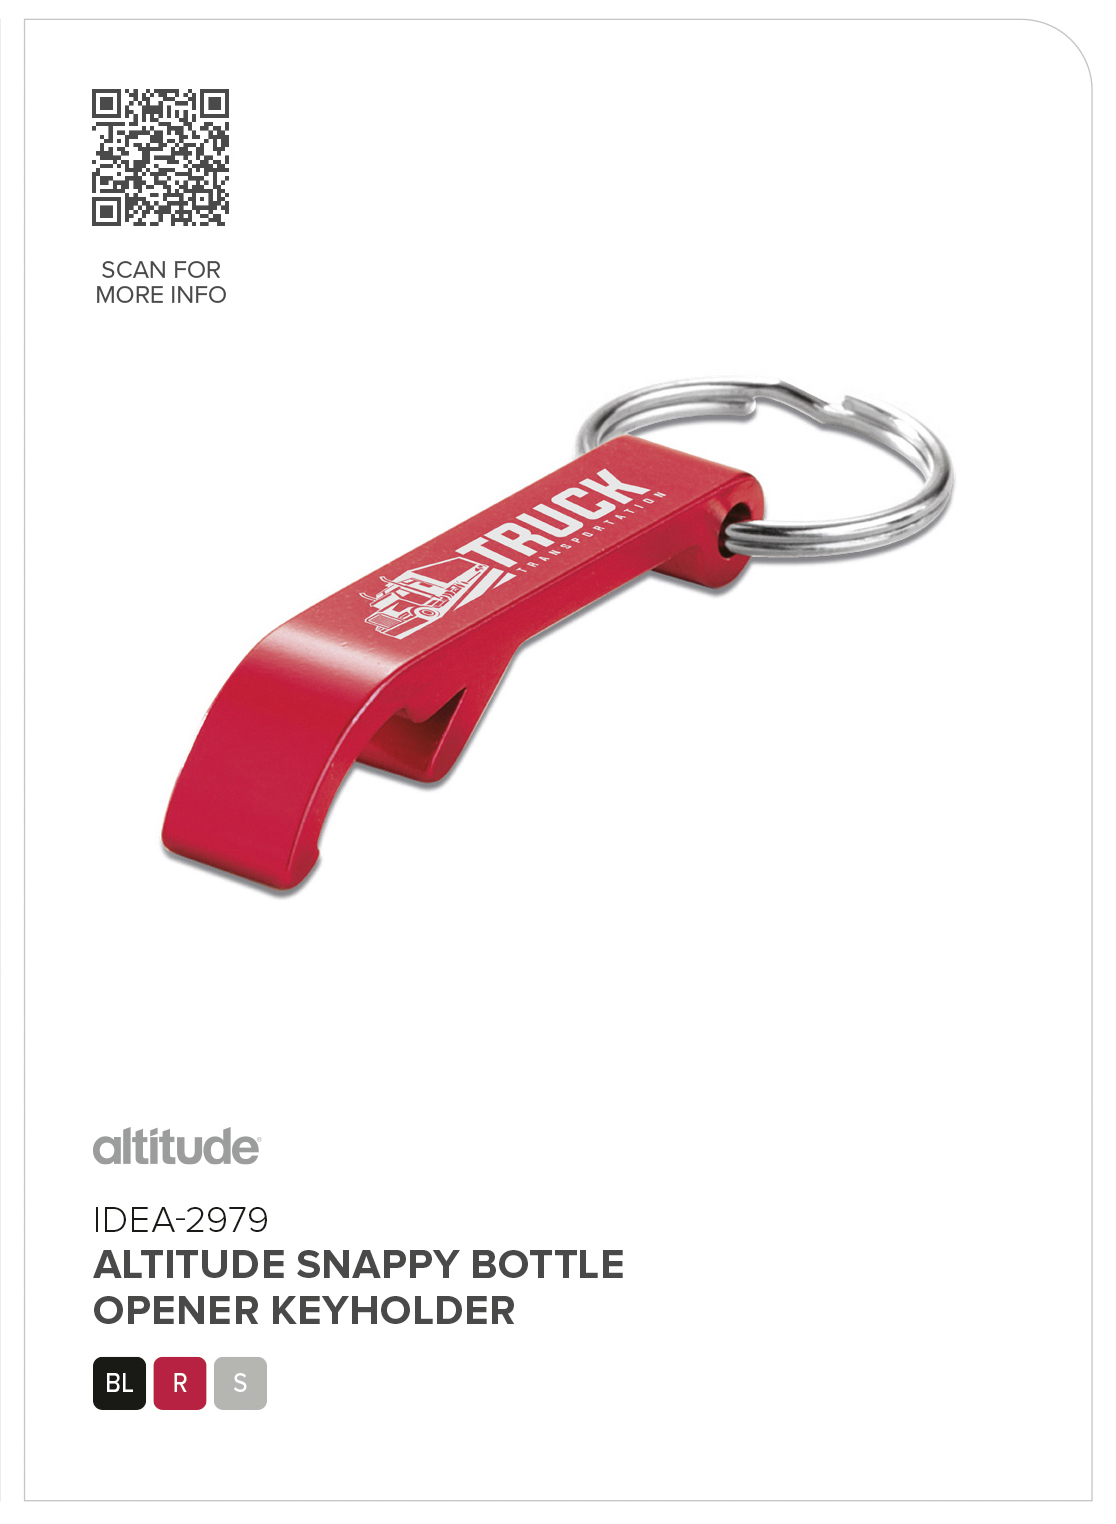 Altitude Snappy Bottle Opener Keyholder